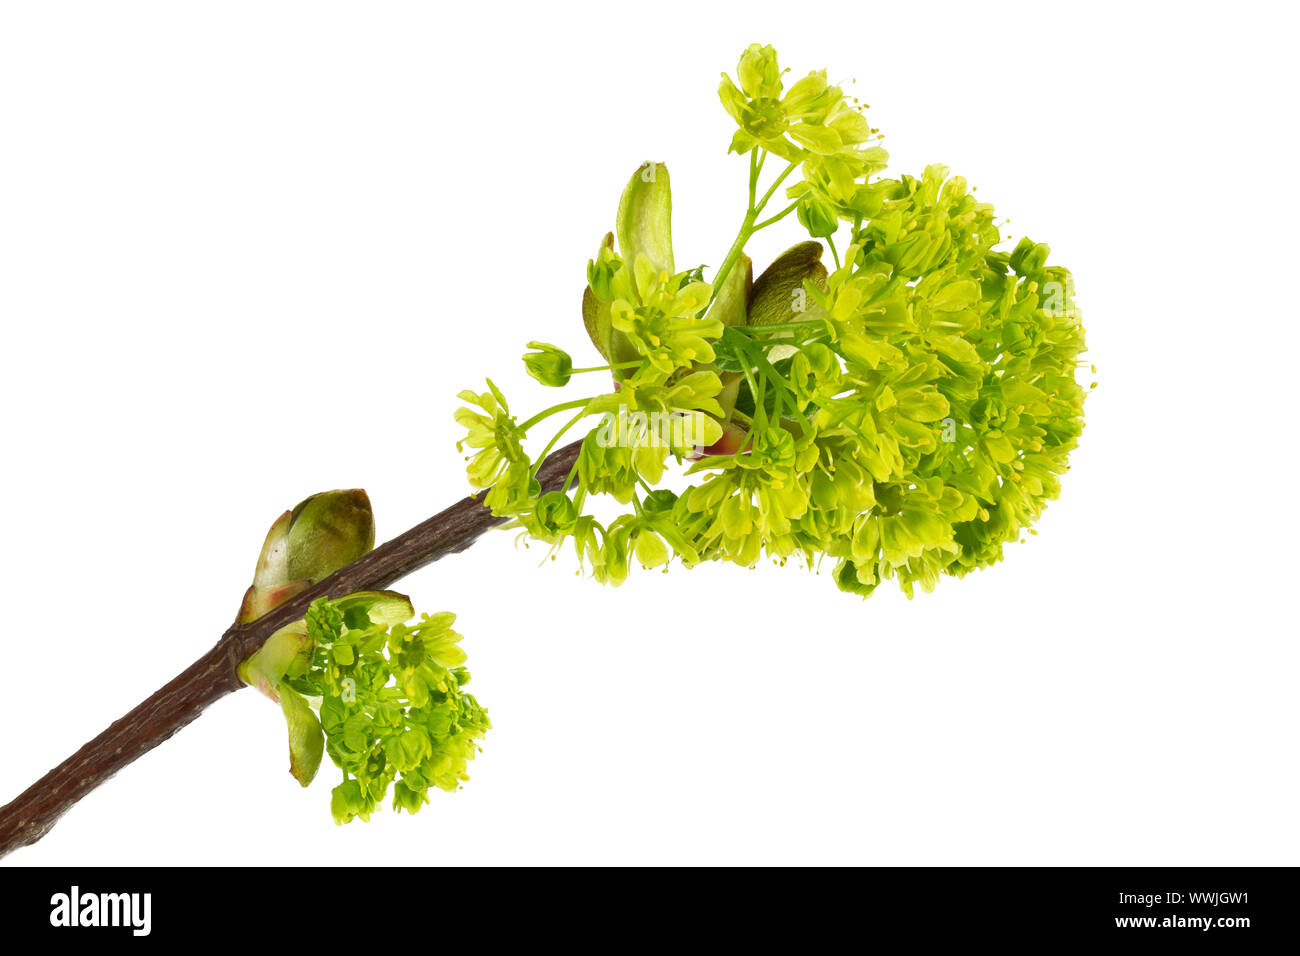 Flower of Spitz maple (Acer Platanonides) Stock Photo